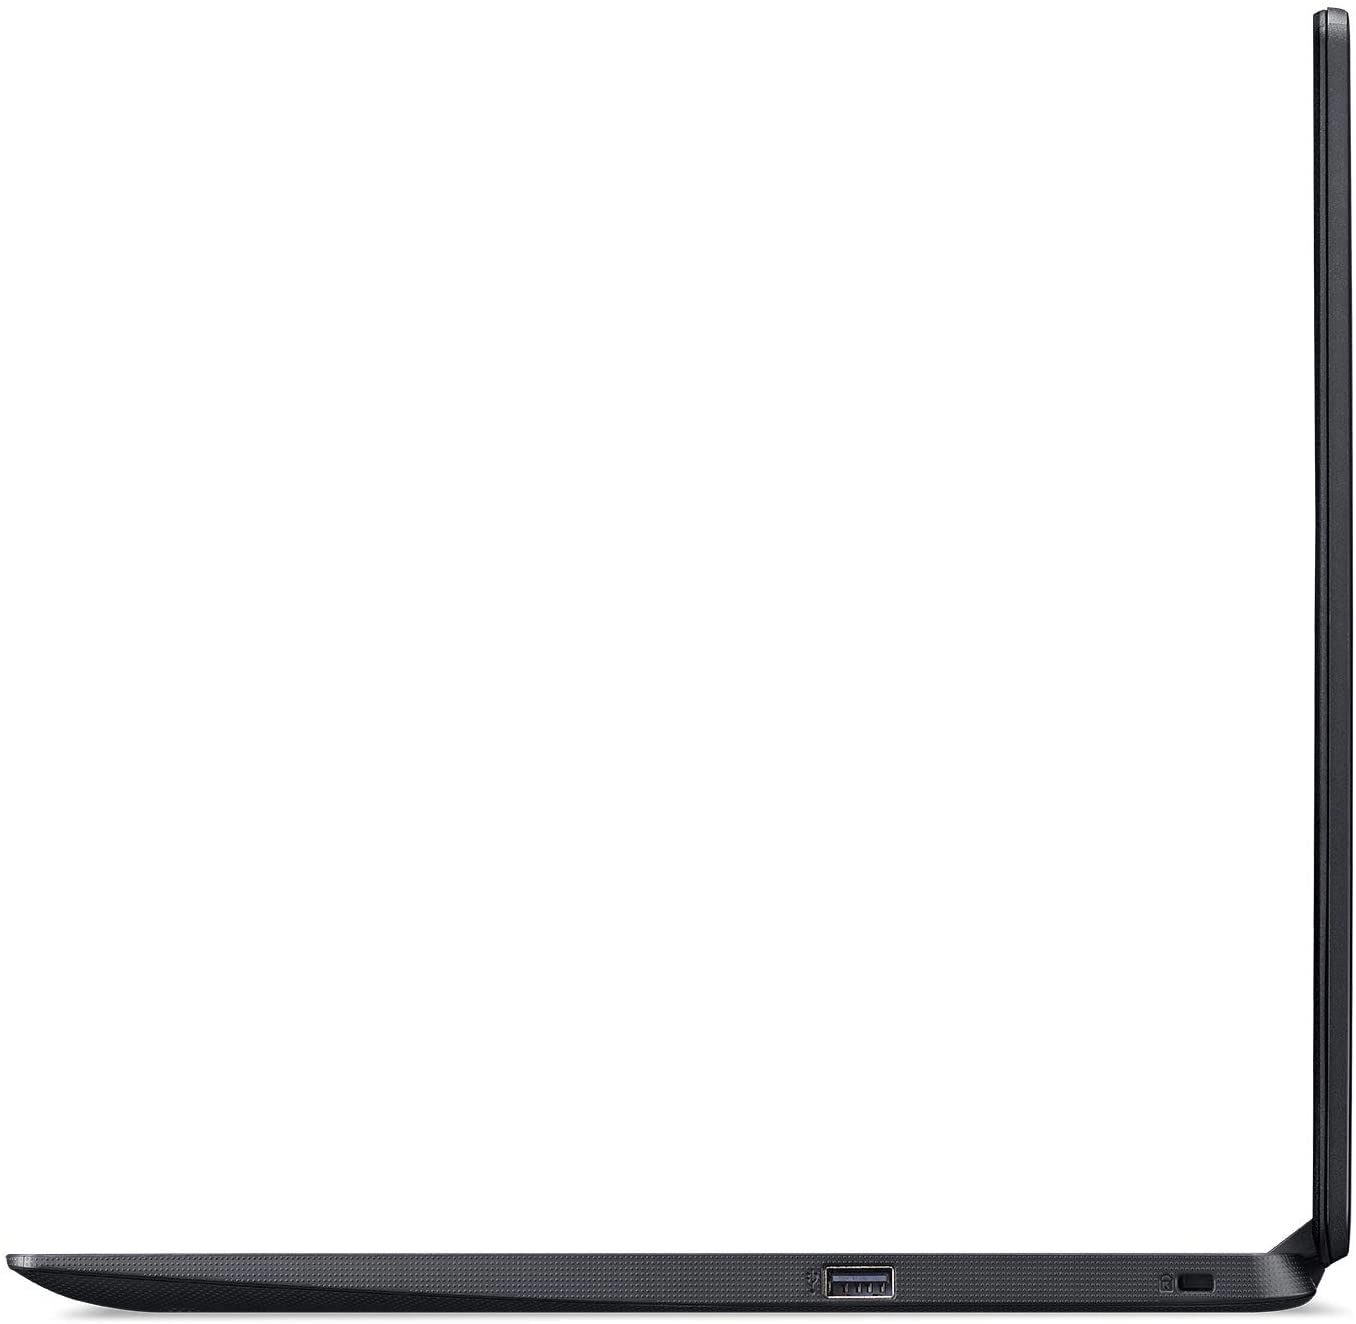 Acer A315-56 laptop image